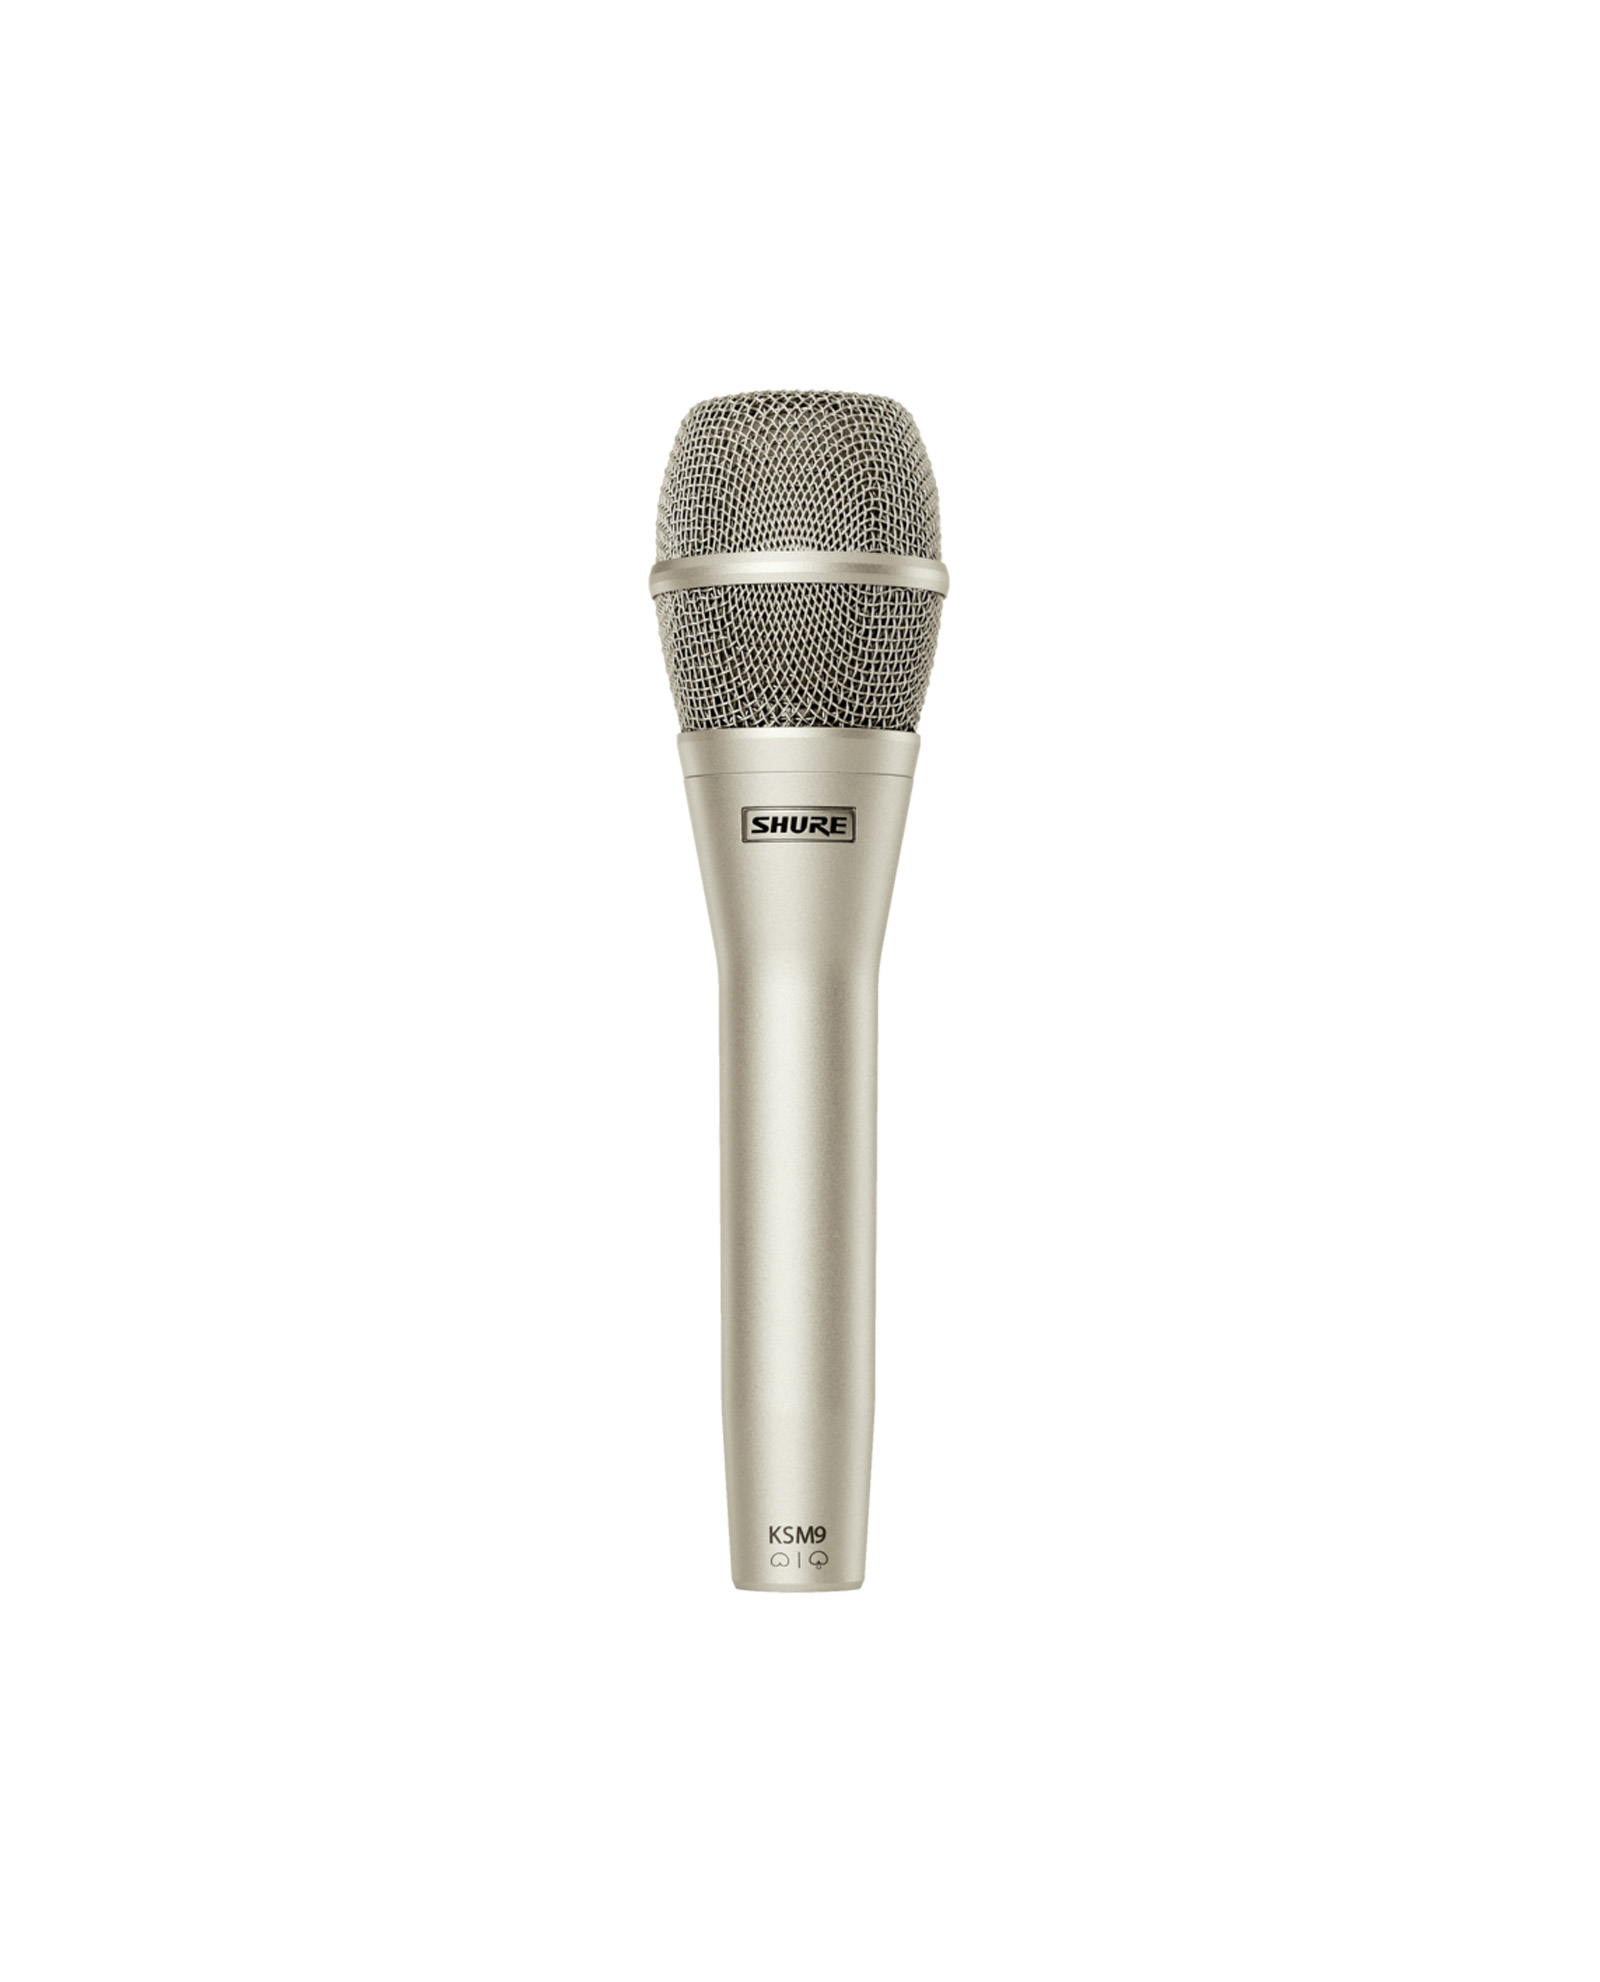 Shure Ksm9 Condenser Vocal Microphone Champagne